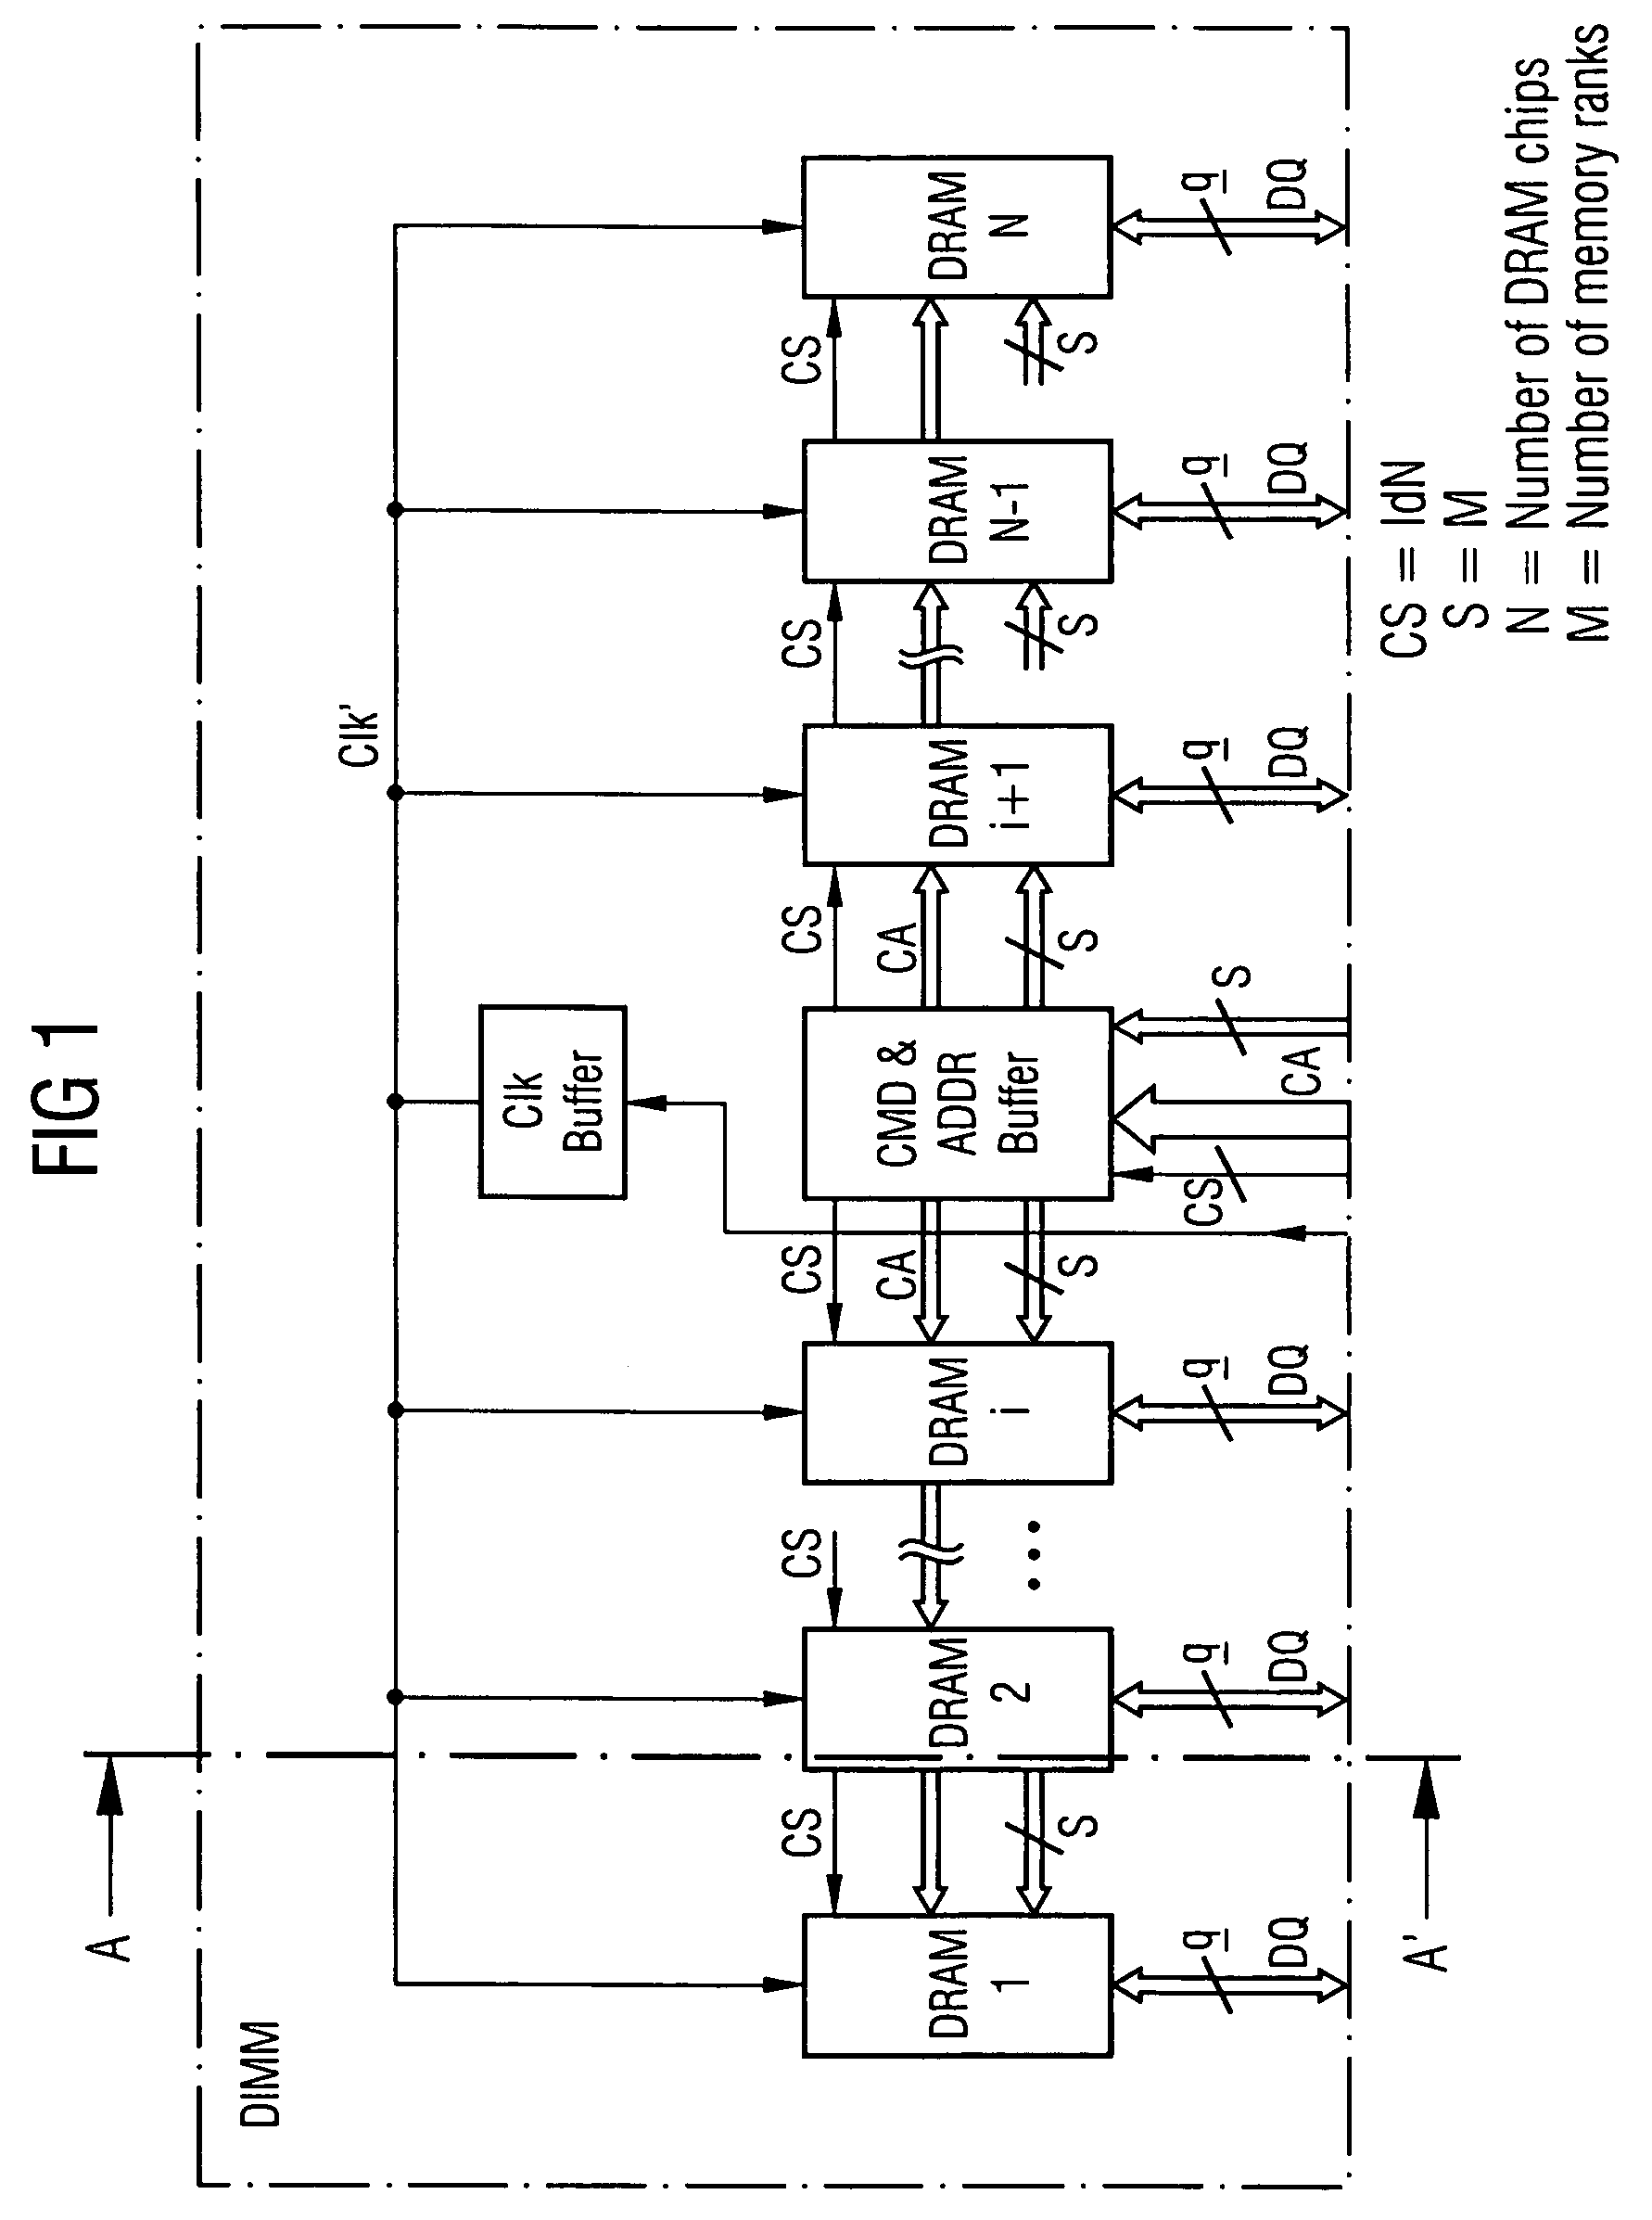 Memory rank decoder for a multi-rank Dual Inline Memory Module (DIMM)